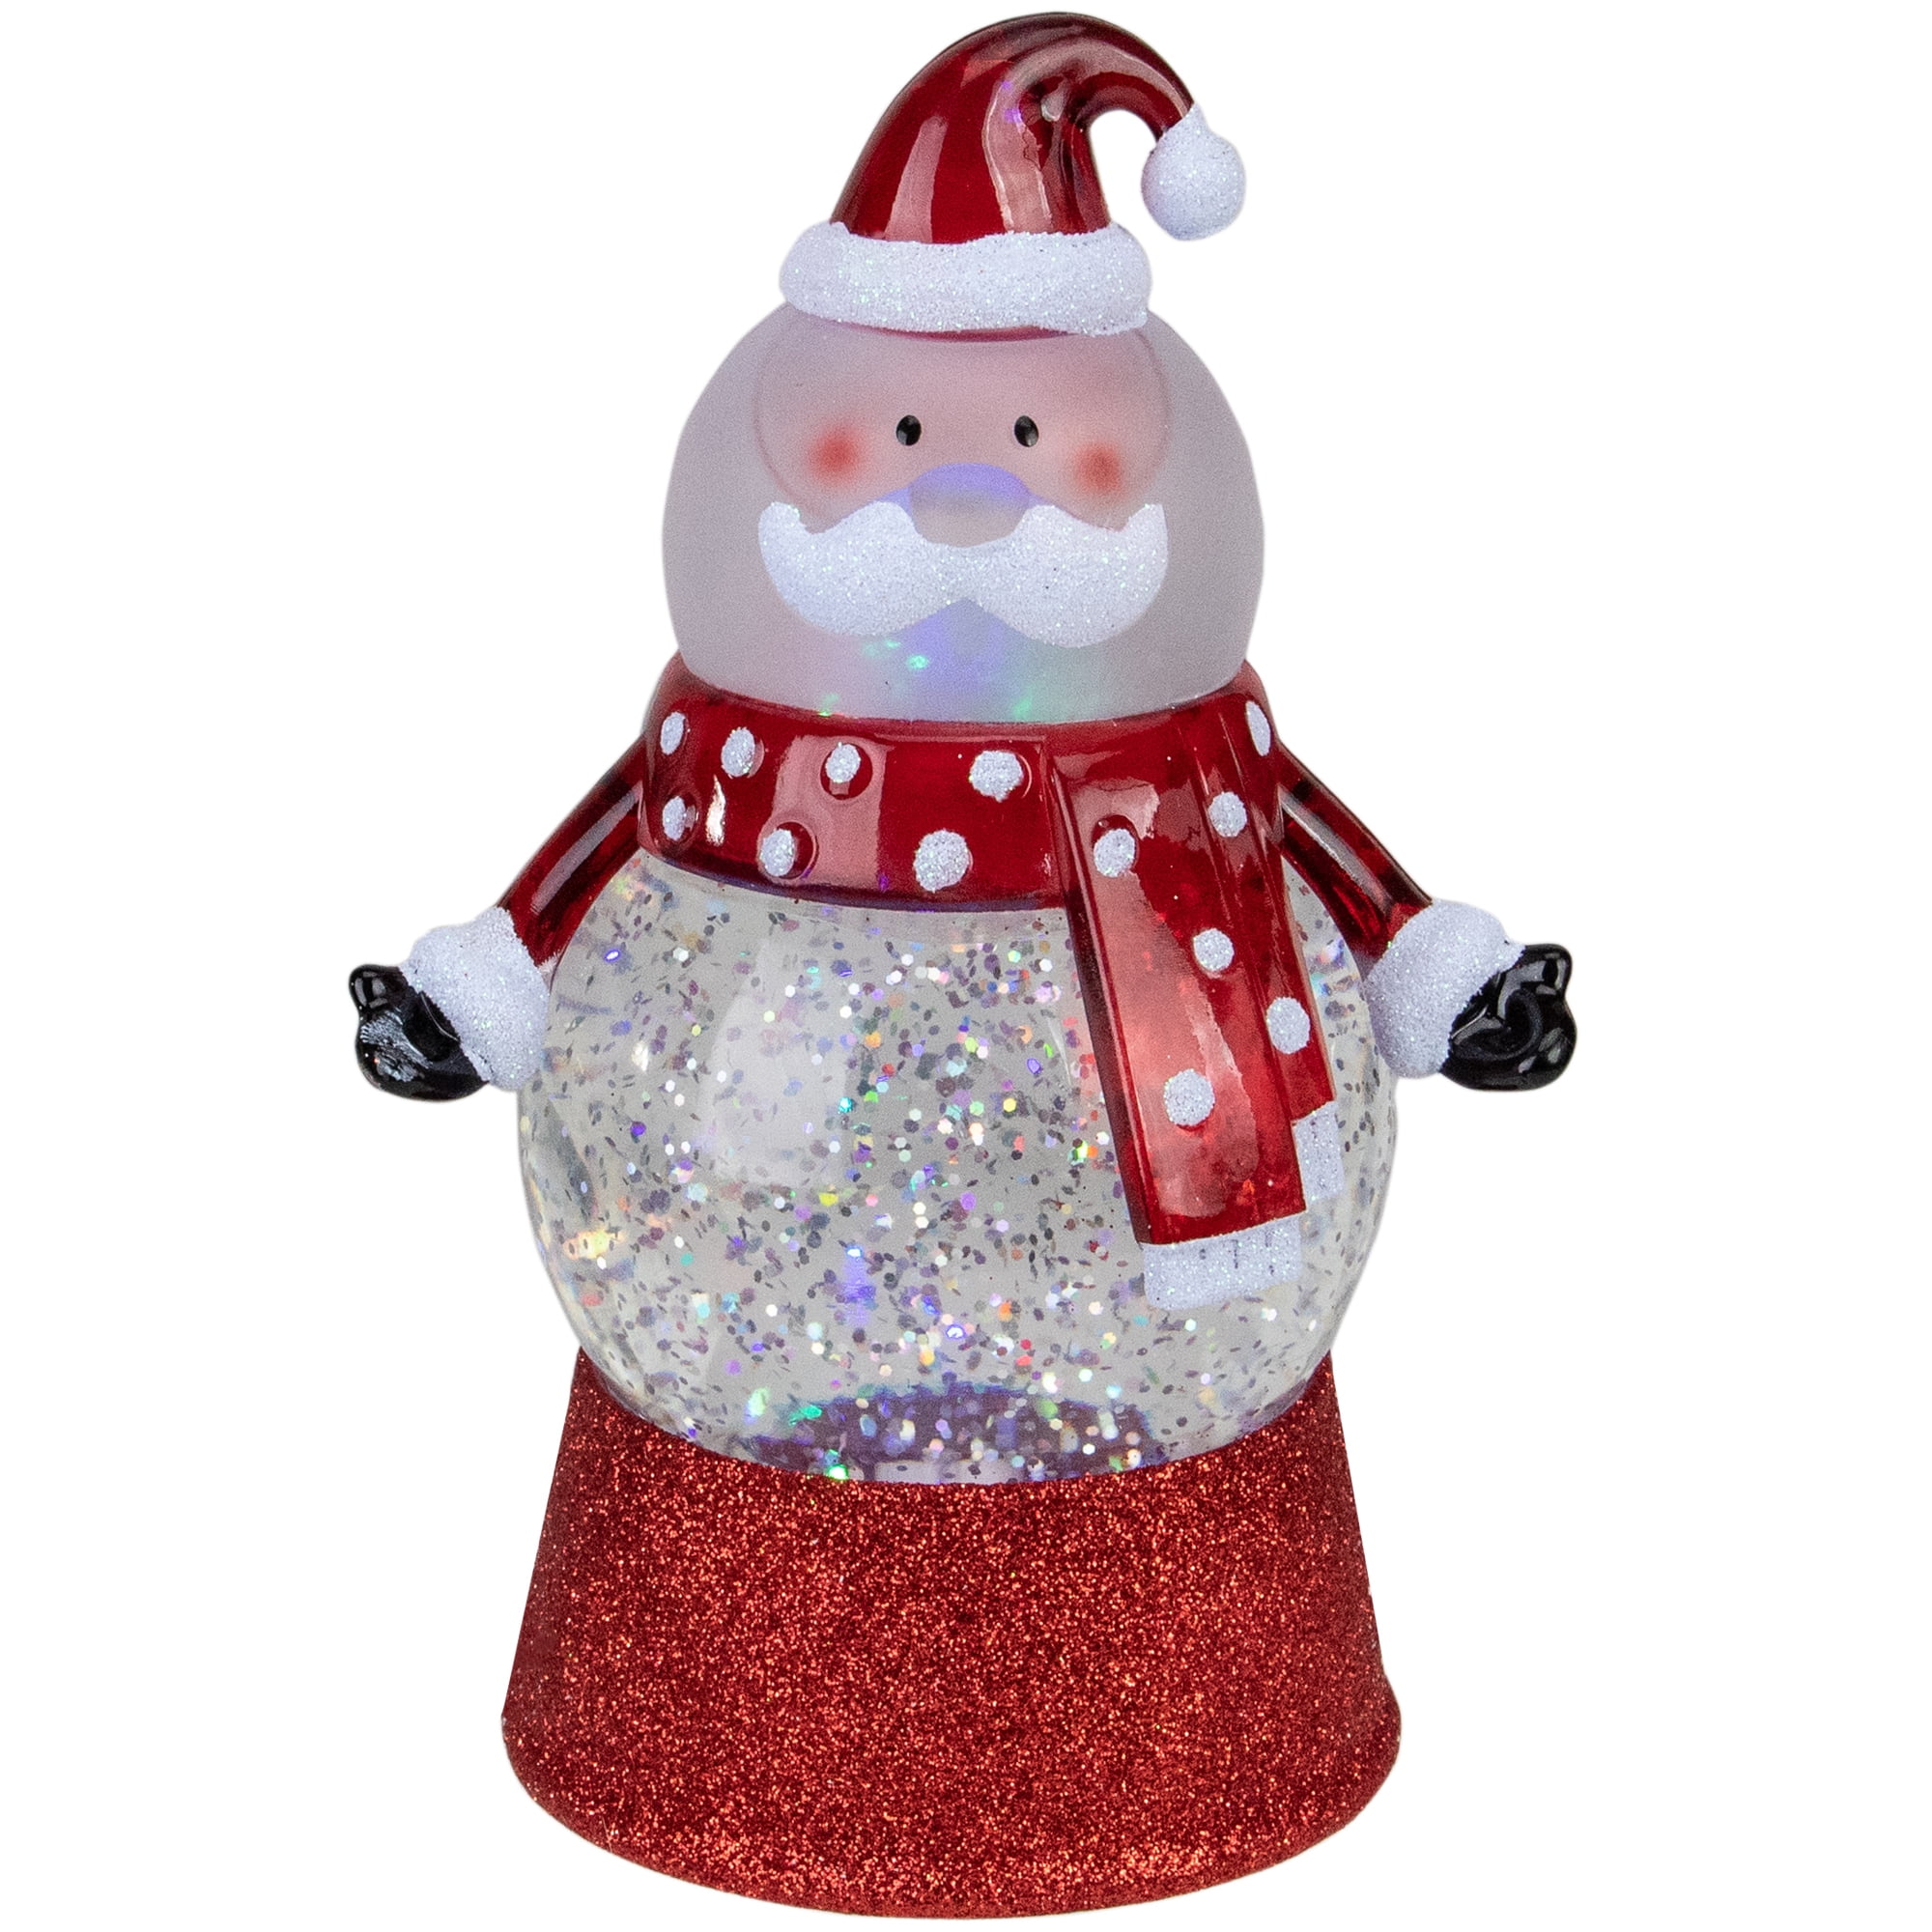 1 " Christmas Crystal Dome Button Boy & Snowman  CMAS 17 FREE US SHIPPING 